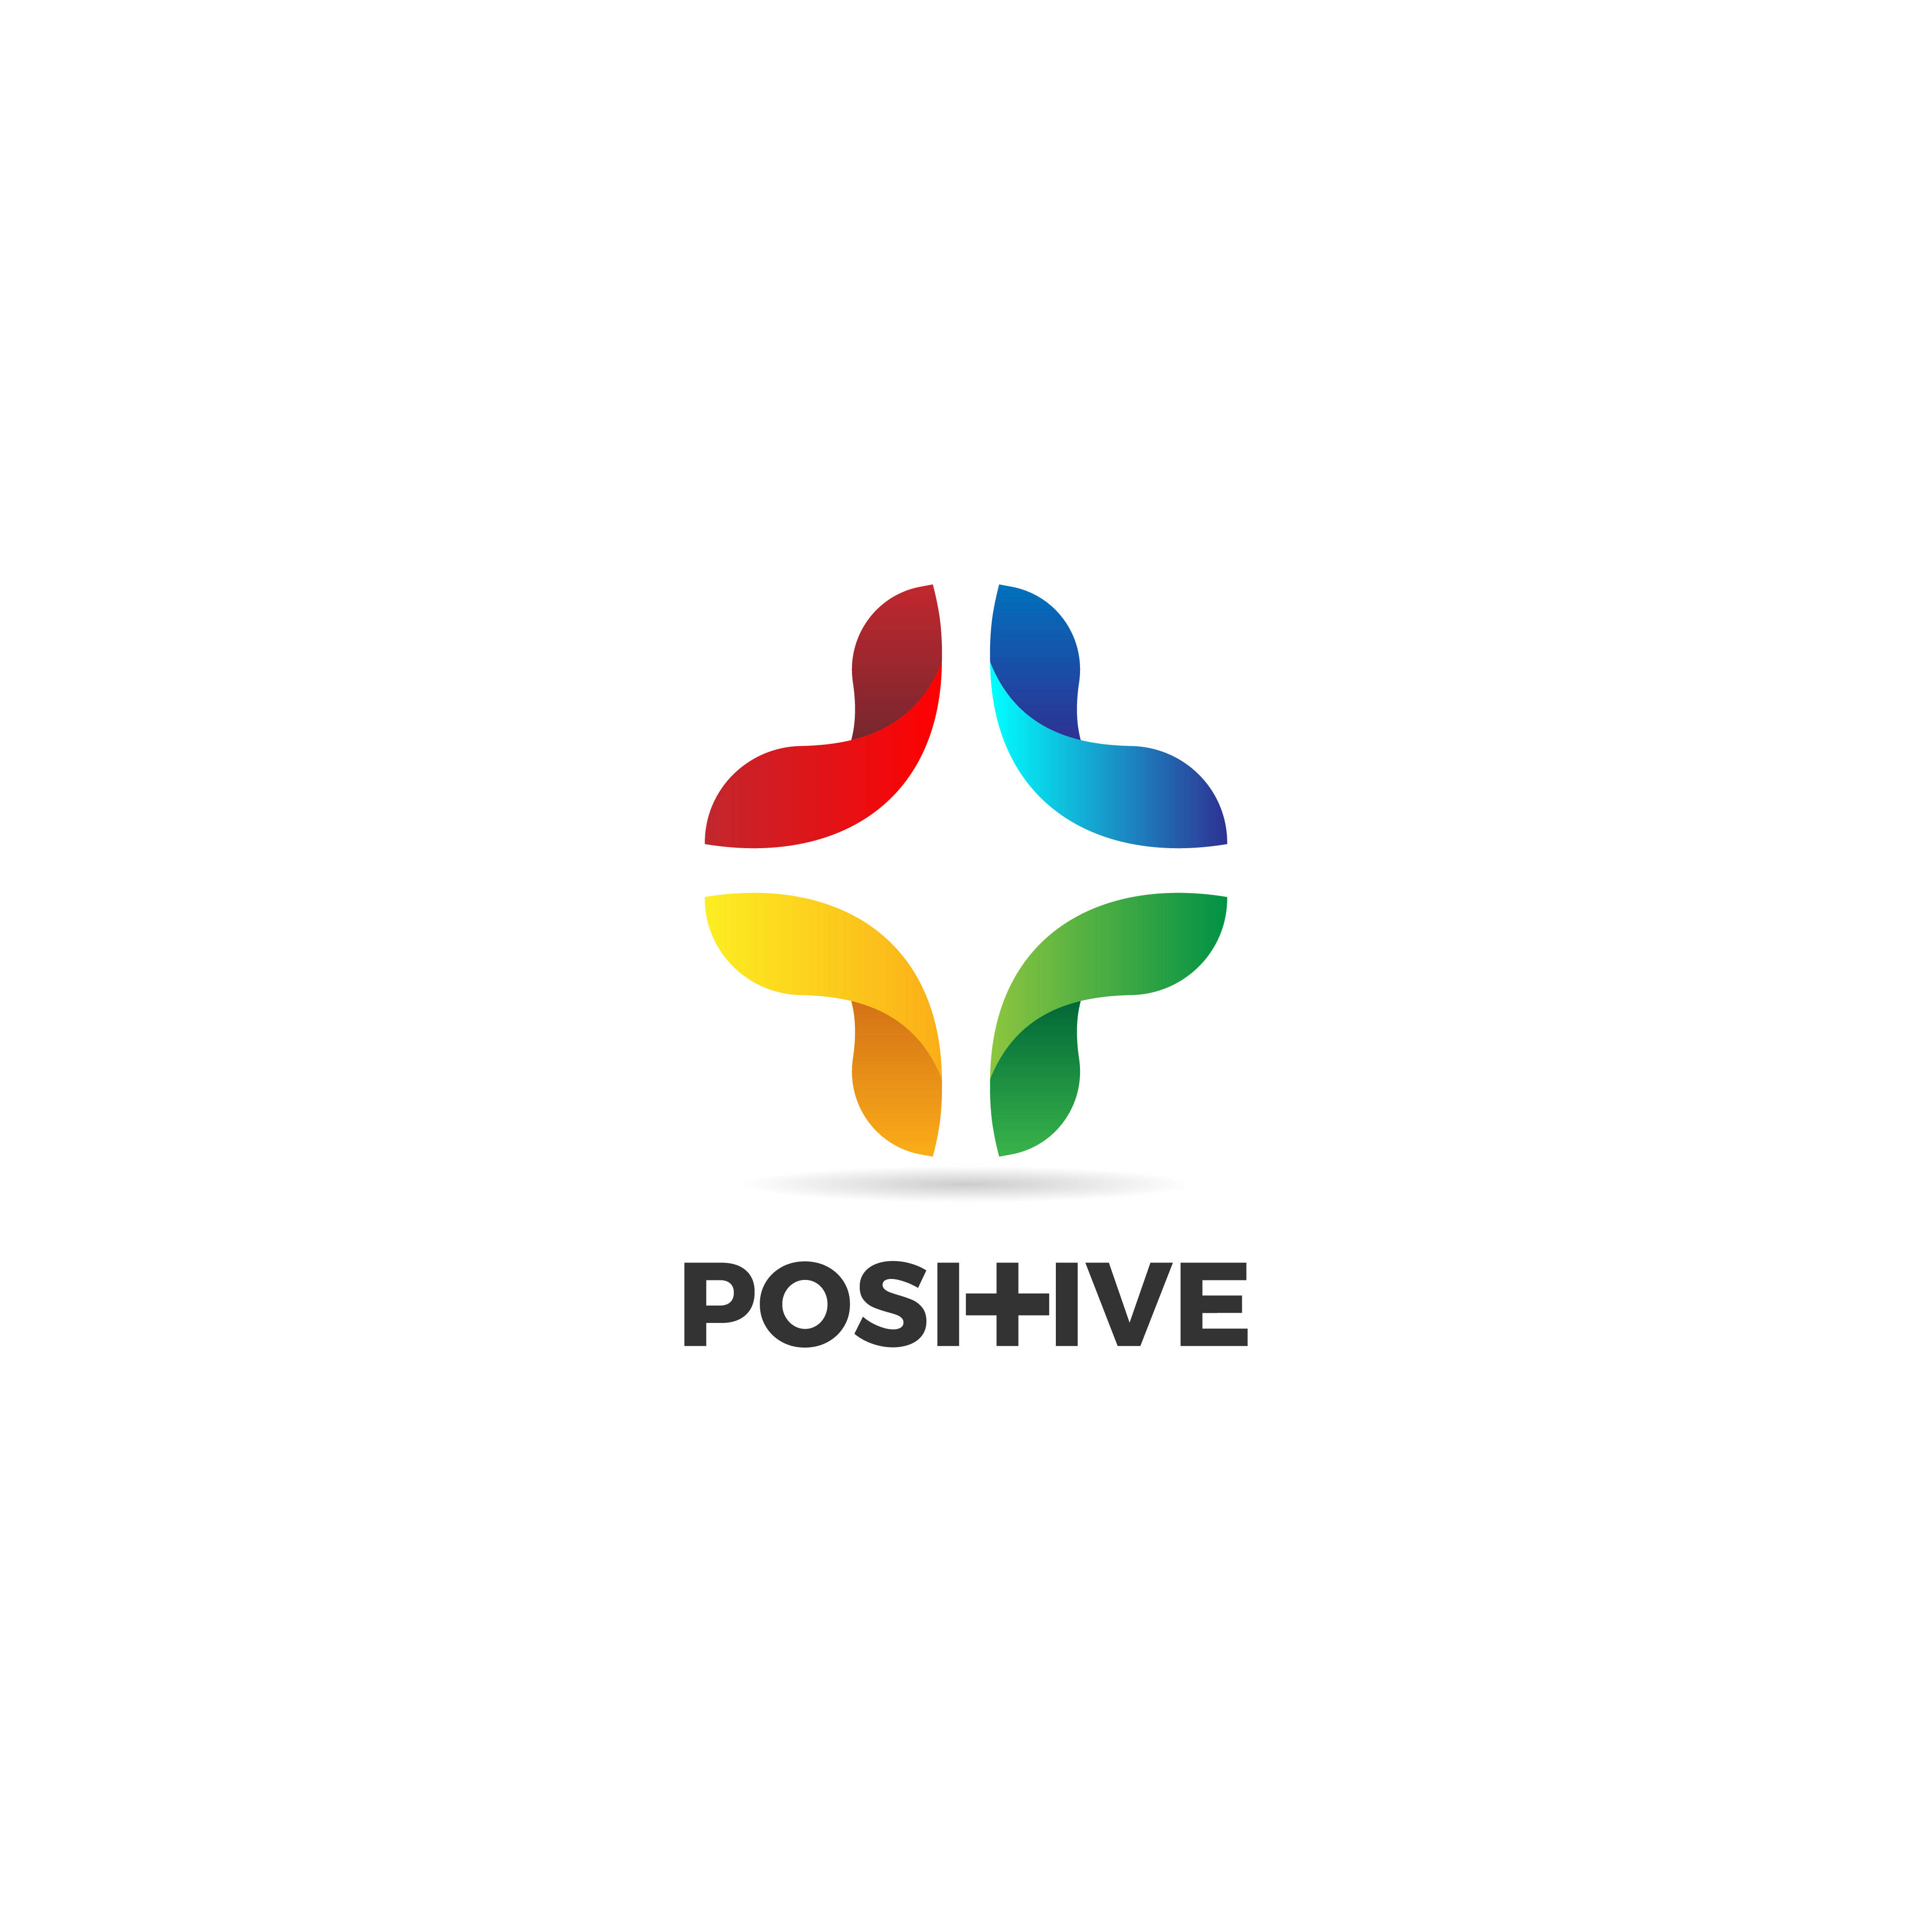 Logo design positive Vectors & Illustrations for Free Download | Freepik